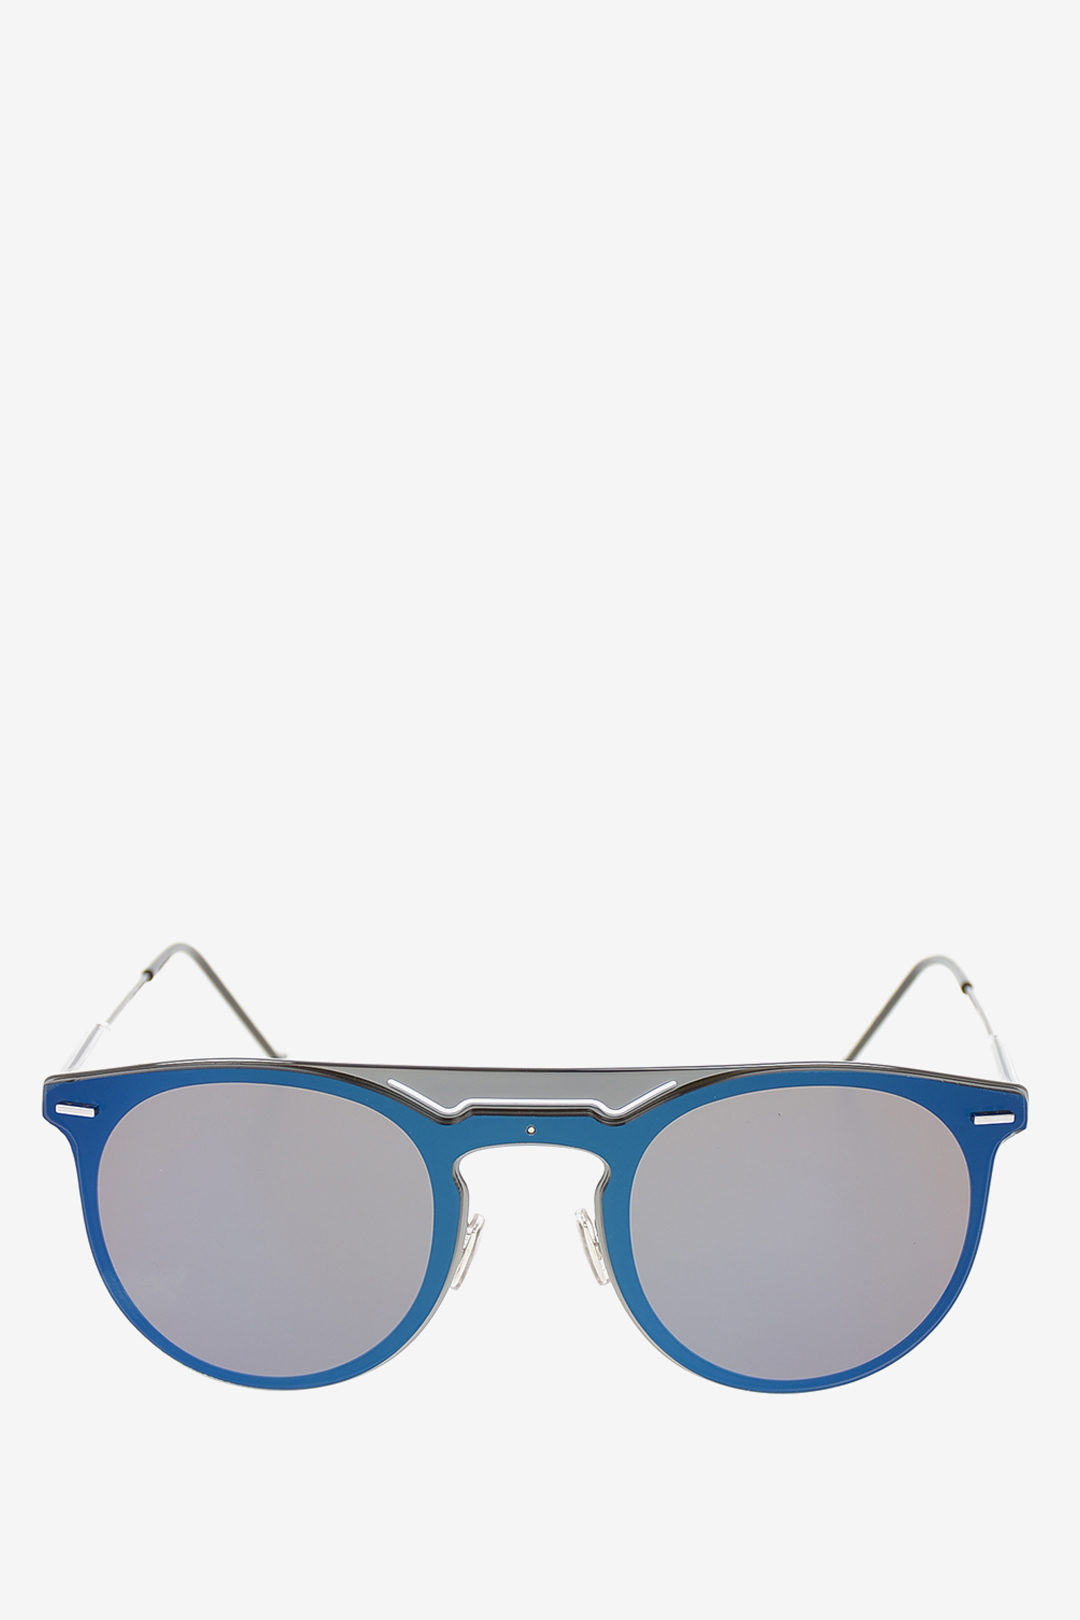 Dior Wayfarer Sunglasses Clearance  xevietnamcom 1687344559